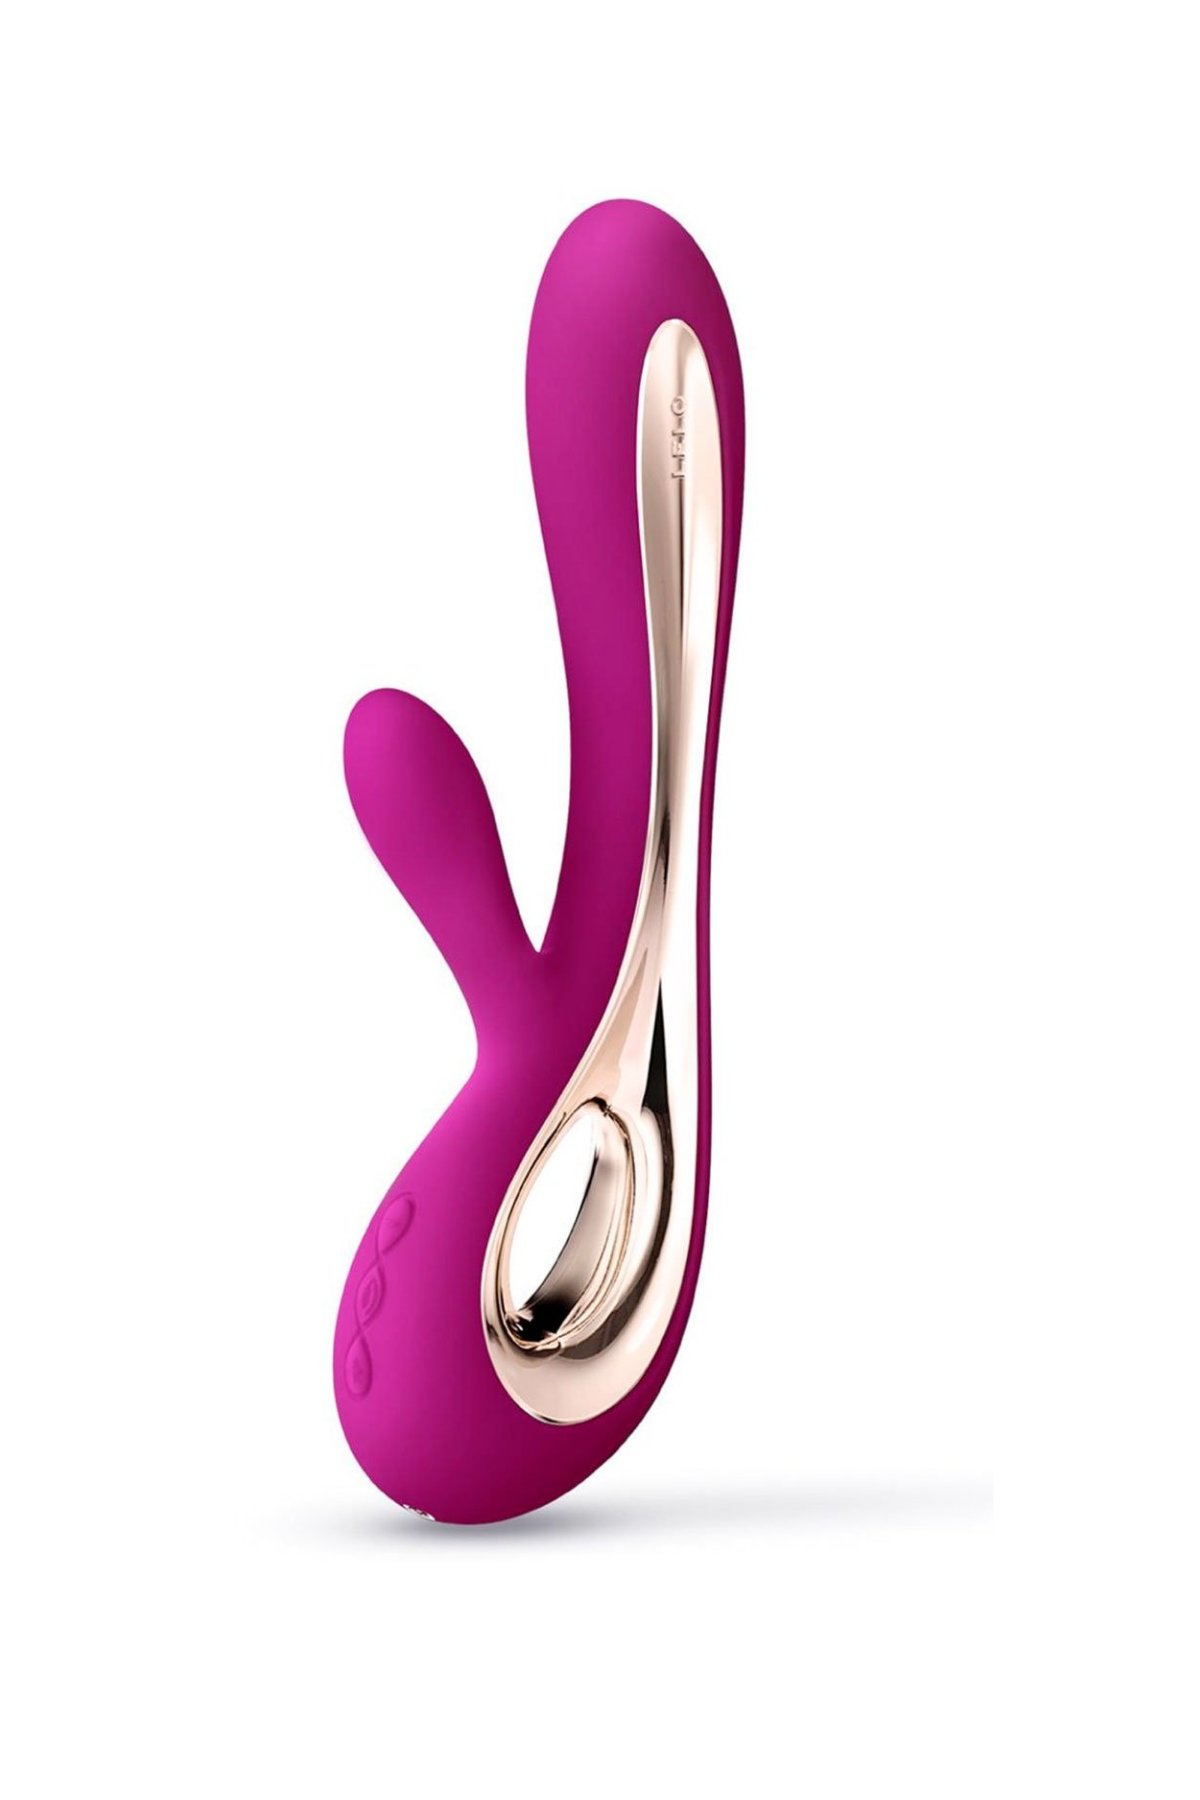 Purple Soraya 2 Rabbit Vibrator by Lelo | Matildas.co.za